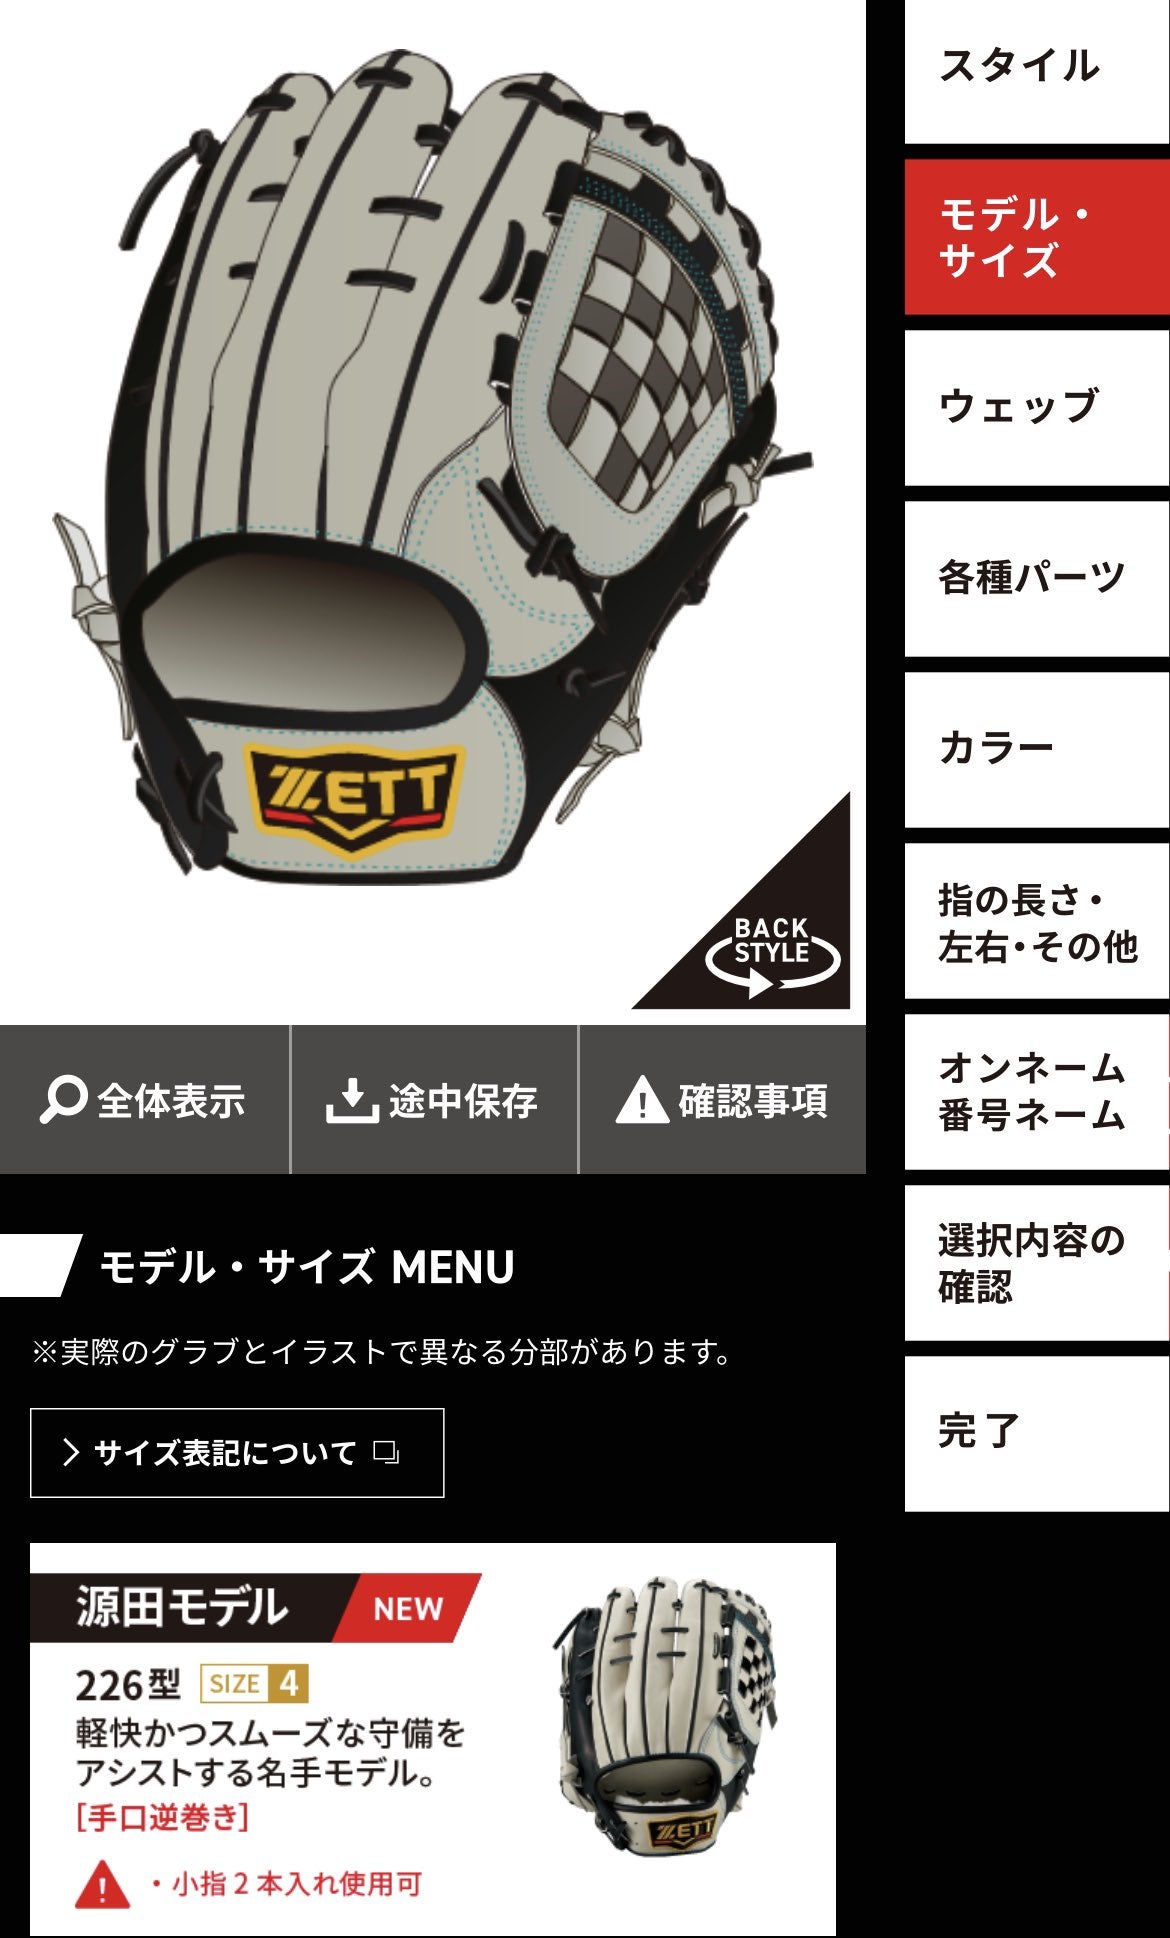 ZETT】小指２本入れ使用可能な源田モデル［226型］についてサクッと 